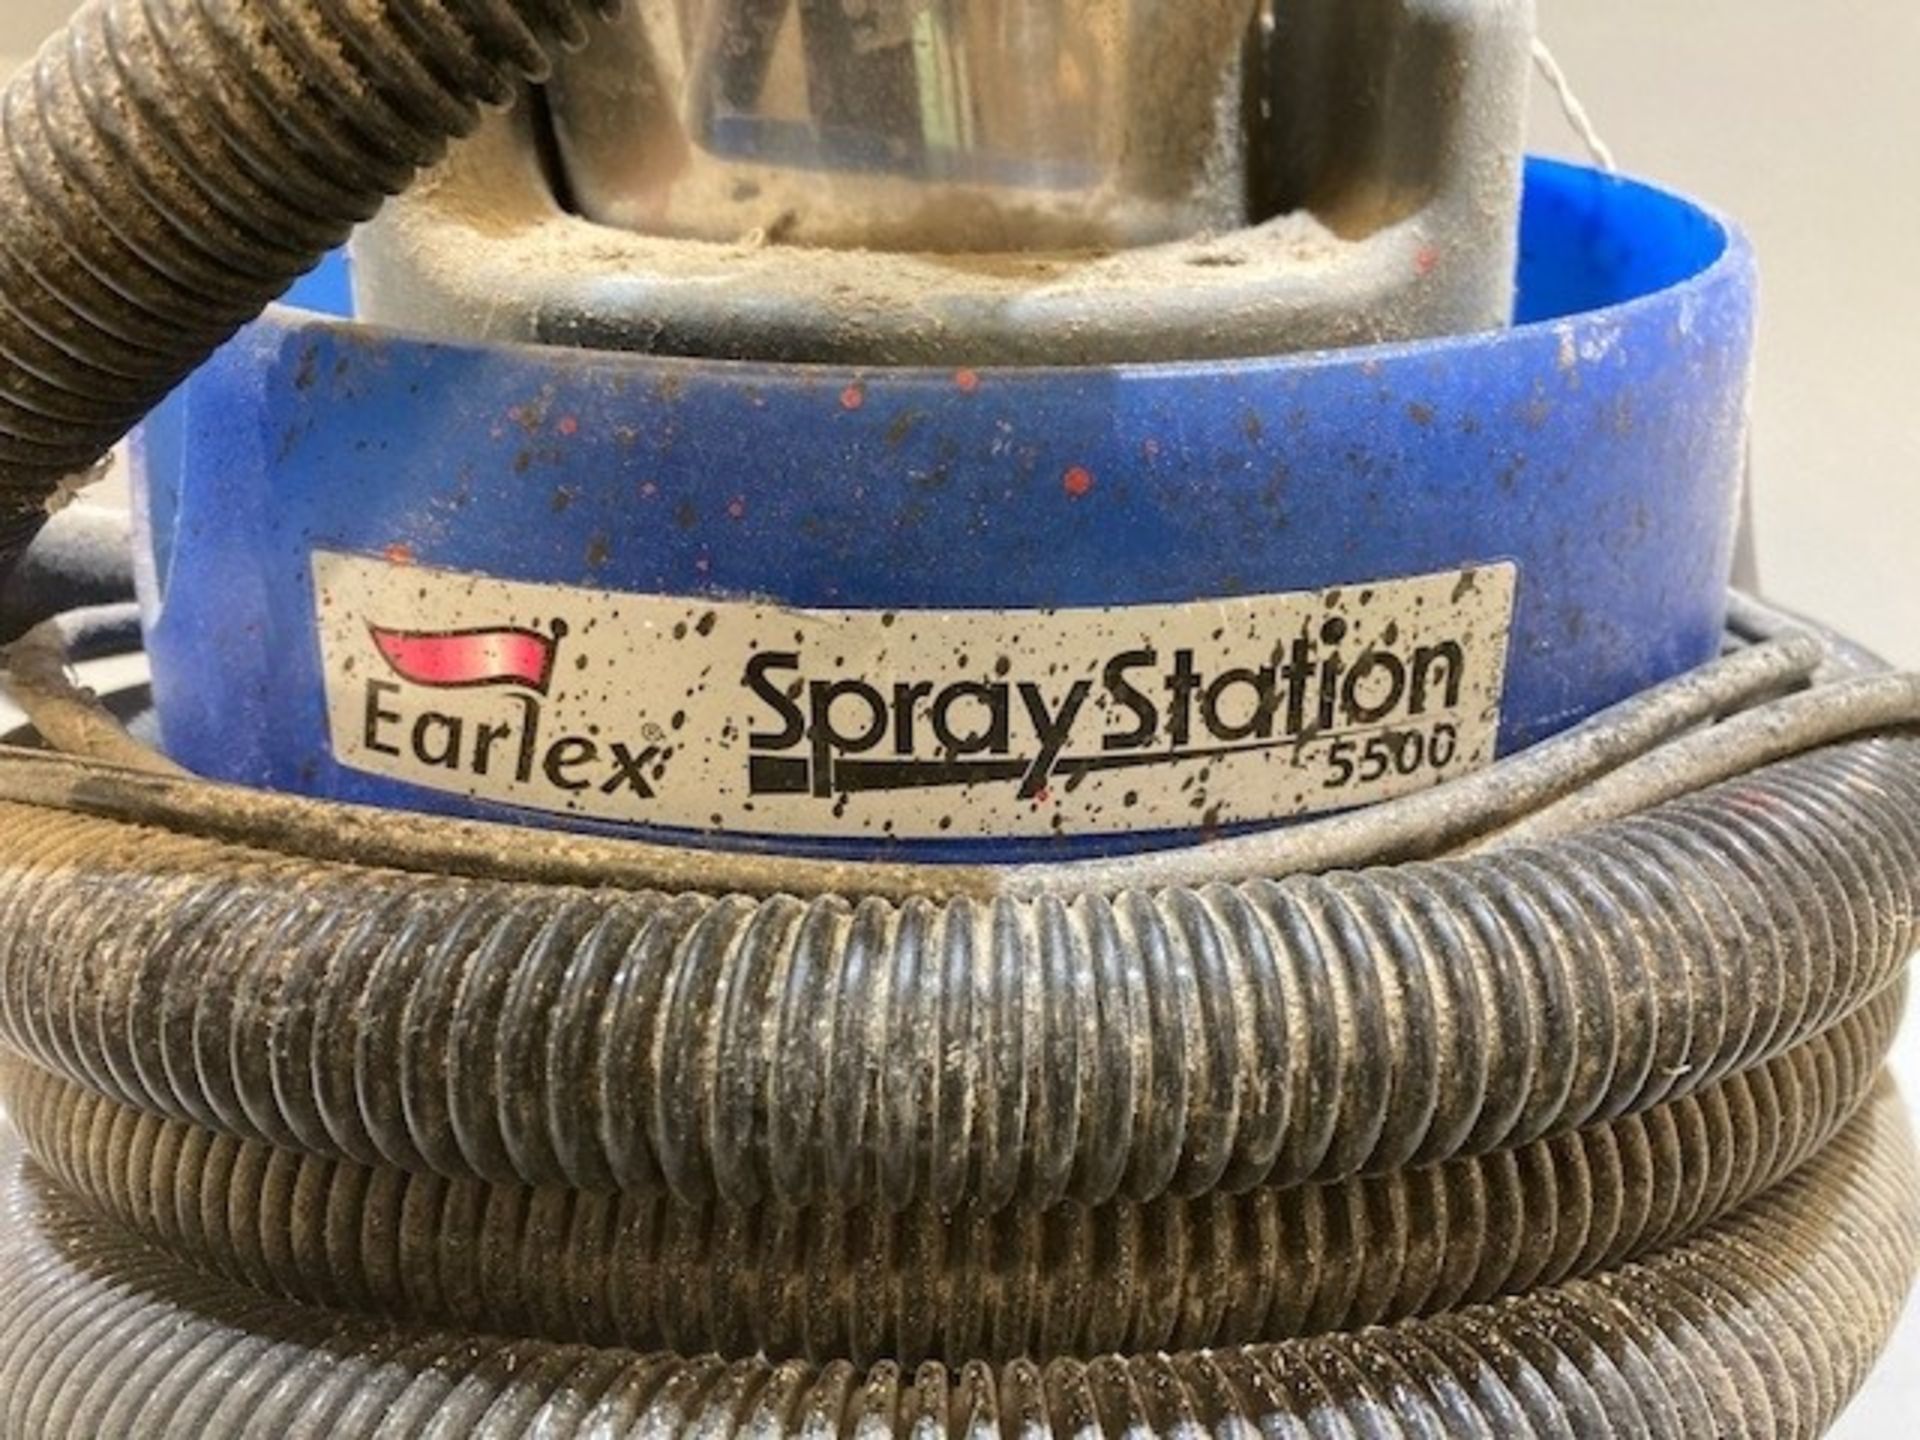 Earlex HV5500 Spray Station - Image 3 of 5